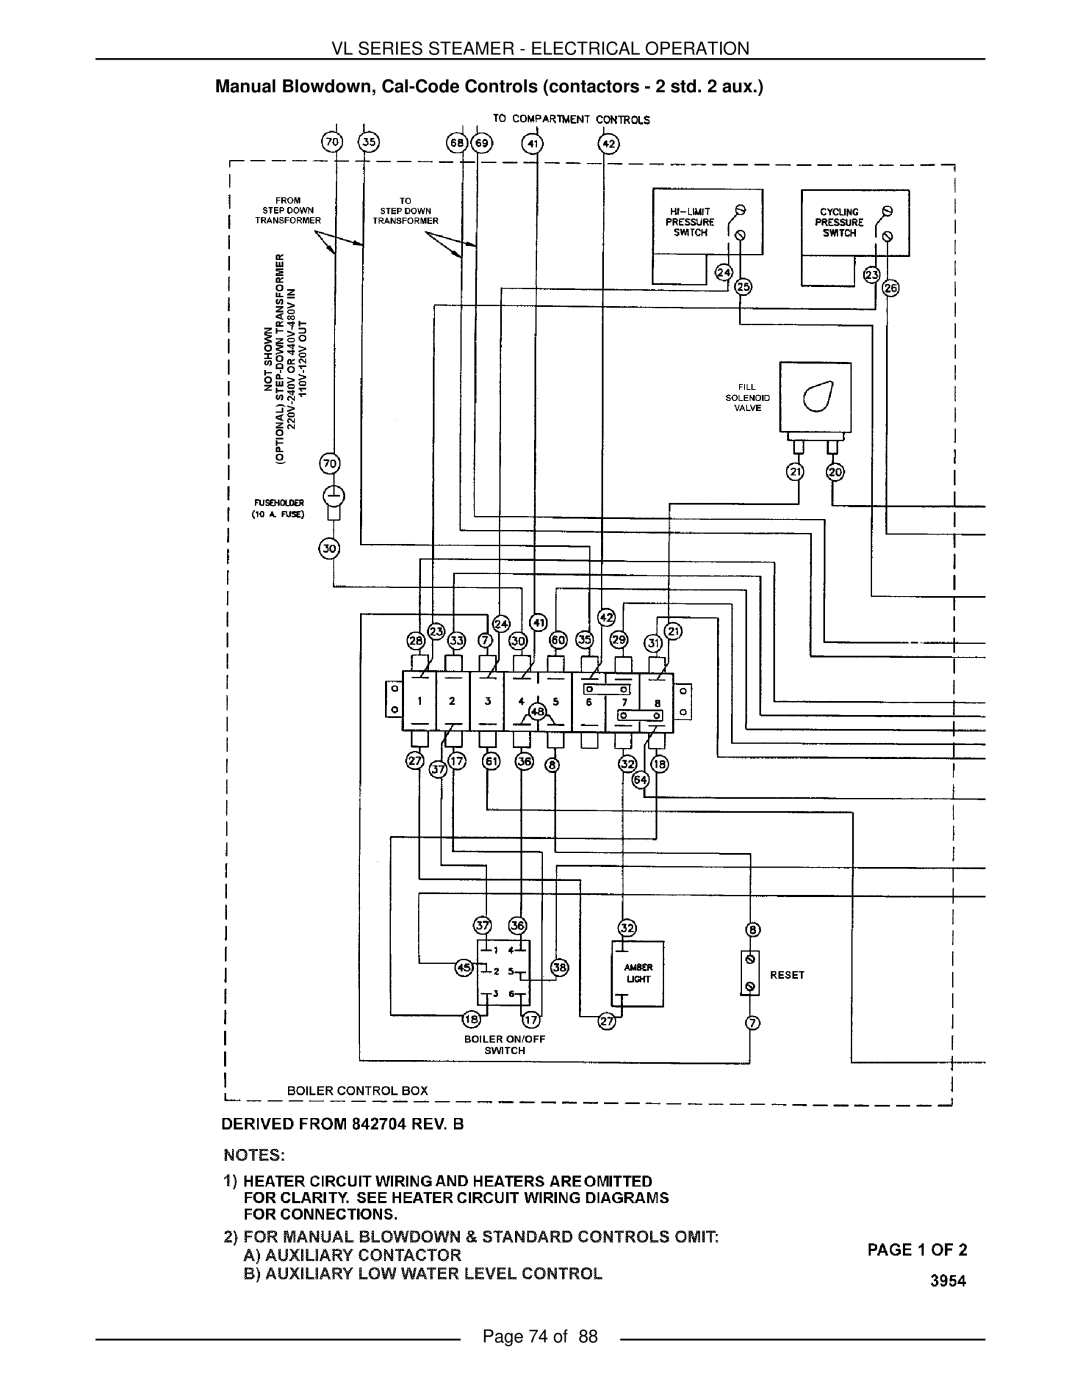 Vulcan-Hart VL3GAS, VL3GMS, VL2GMS, VL2GAS, VL2GSS, VL3GSS, VL3GPS, VL2GPS Vl Series Steamer - Electrical Operation, Page 74 of 